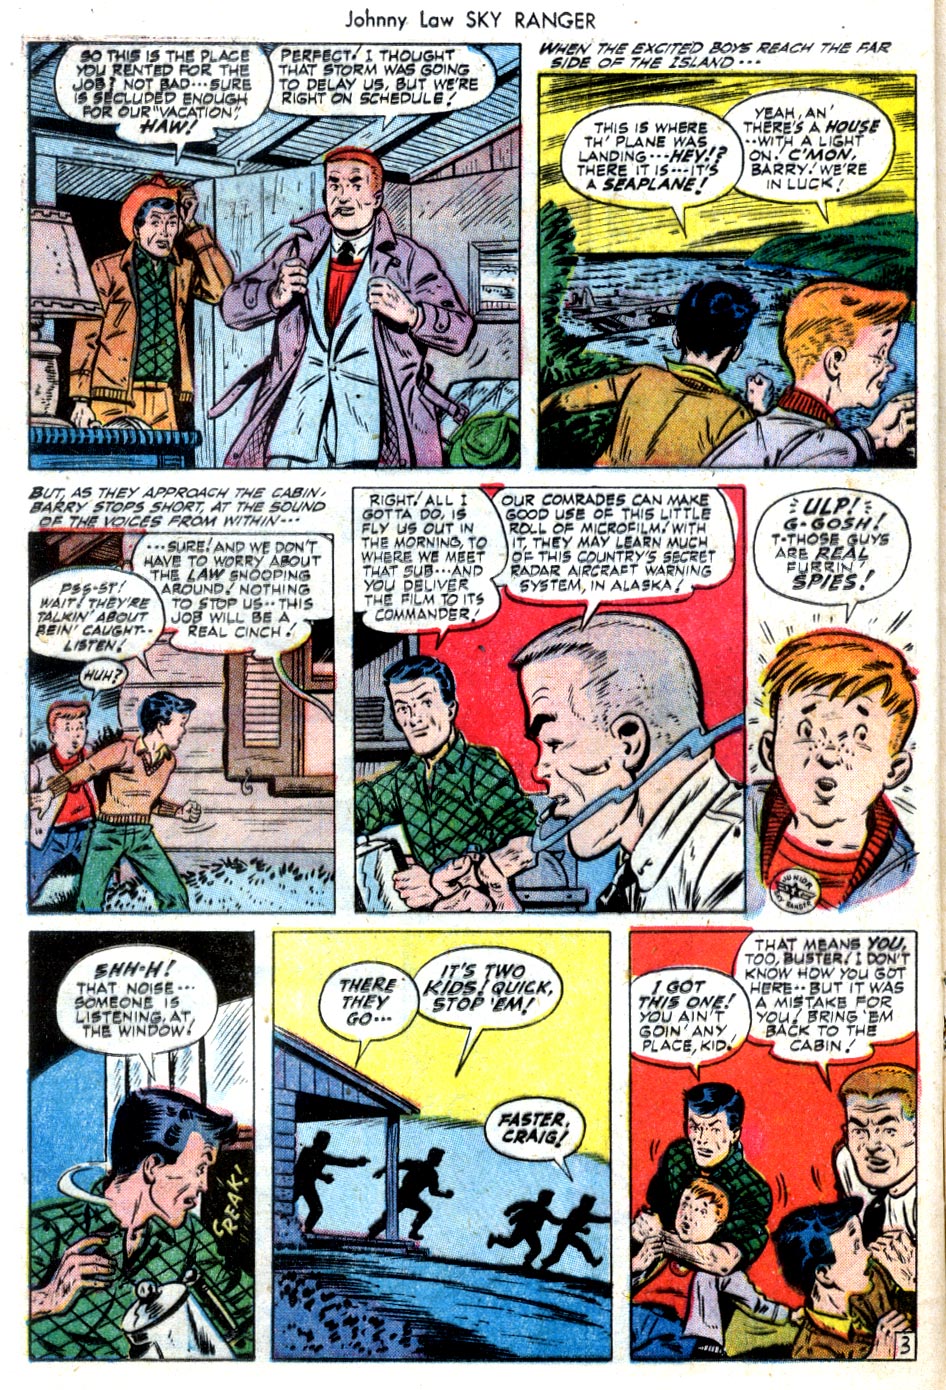 Read online Johnny Law Sky Ranger Adventures comic -  Issue #4 - 14